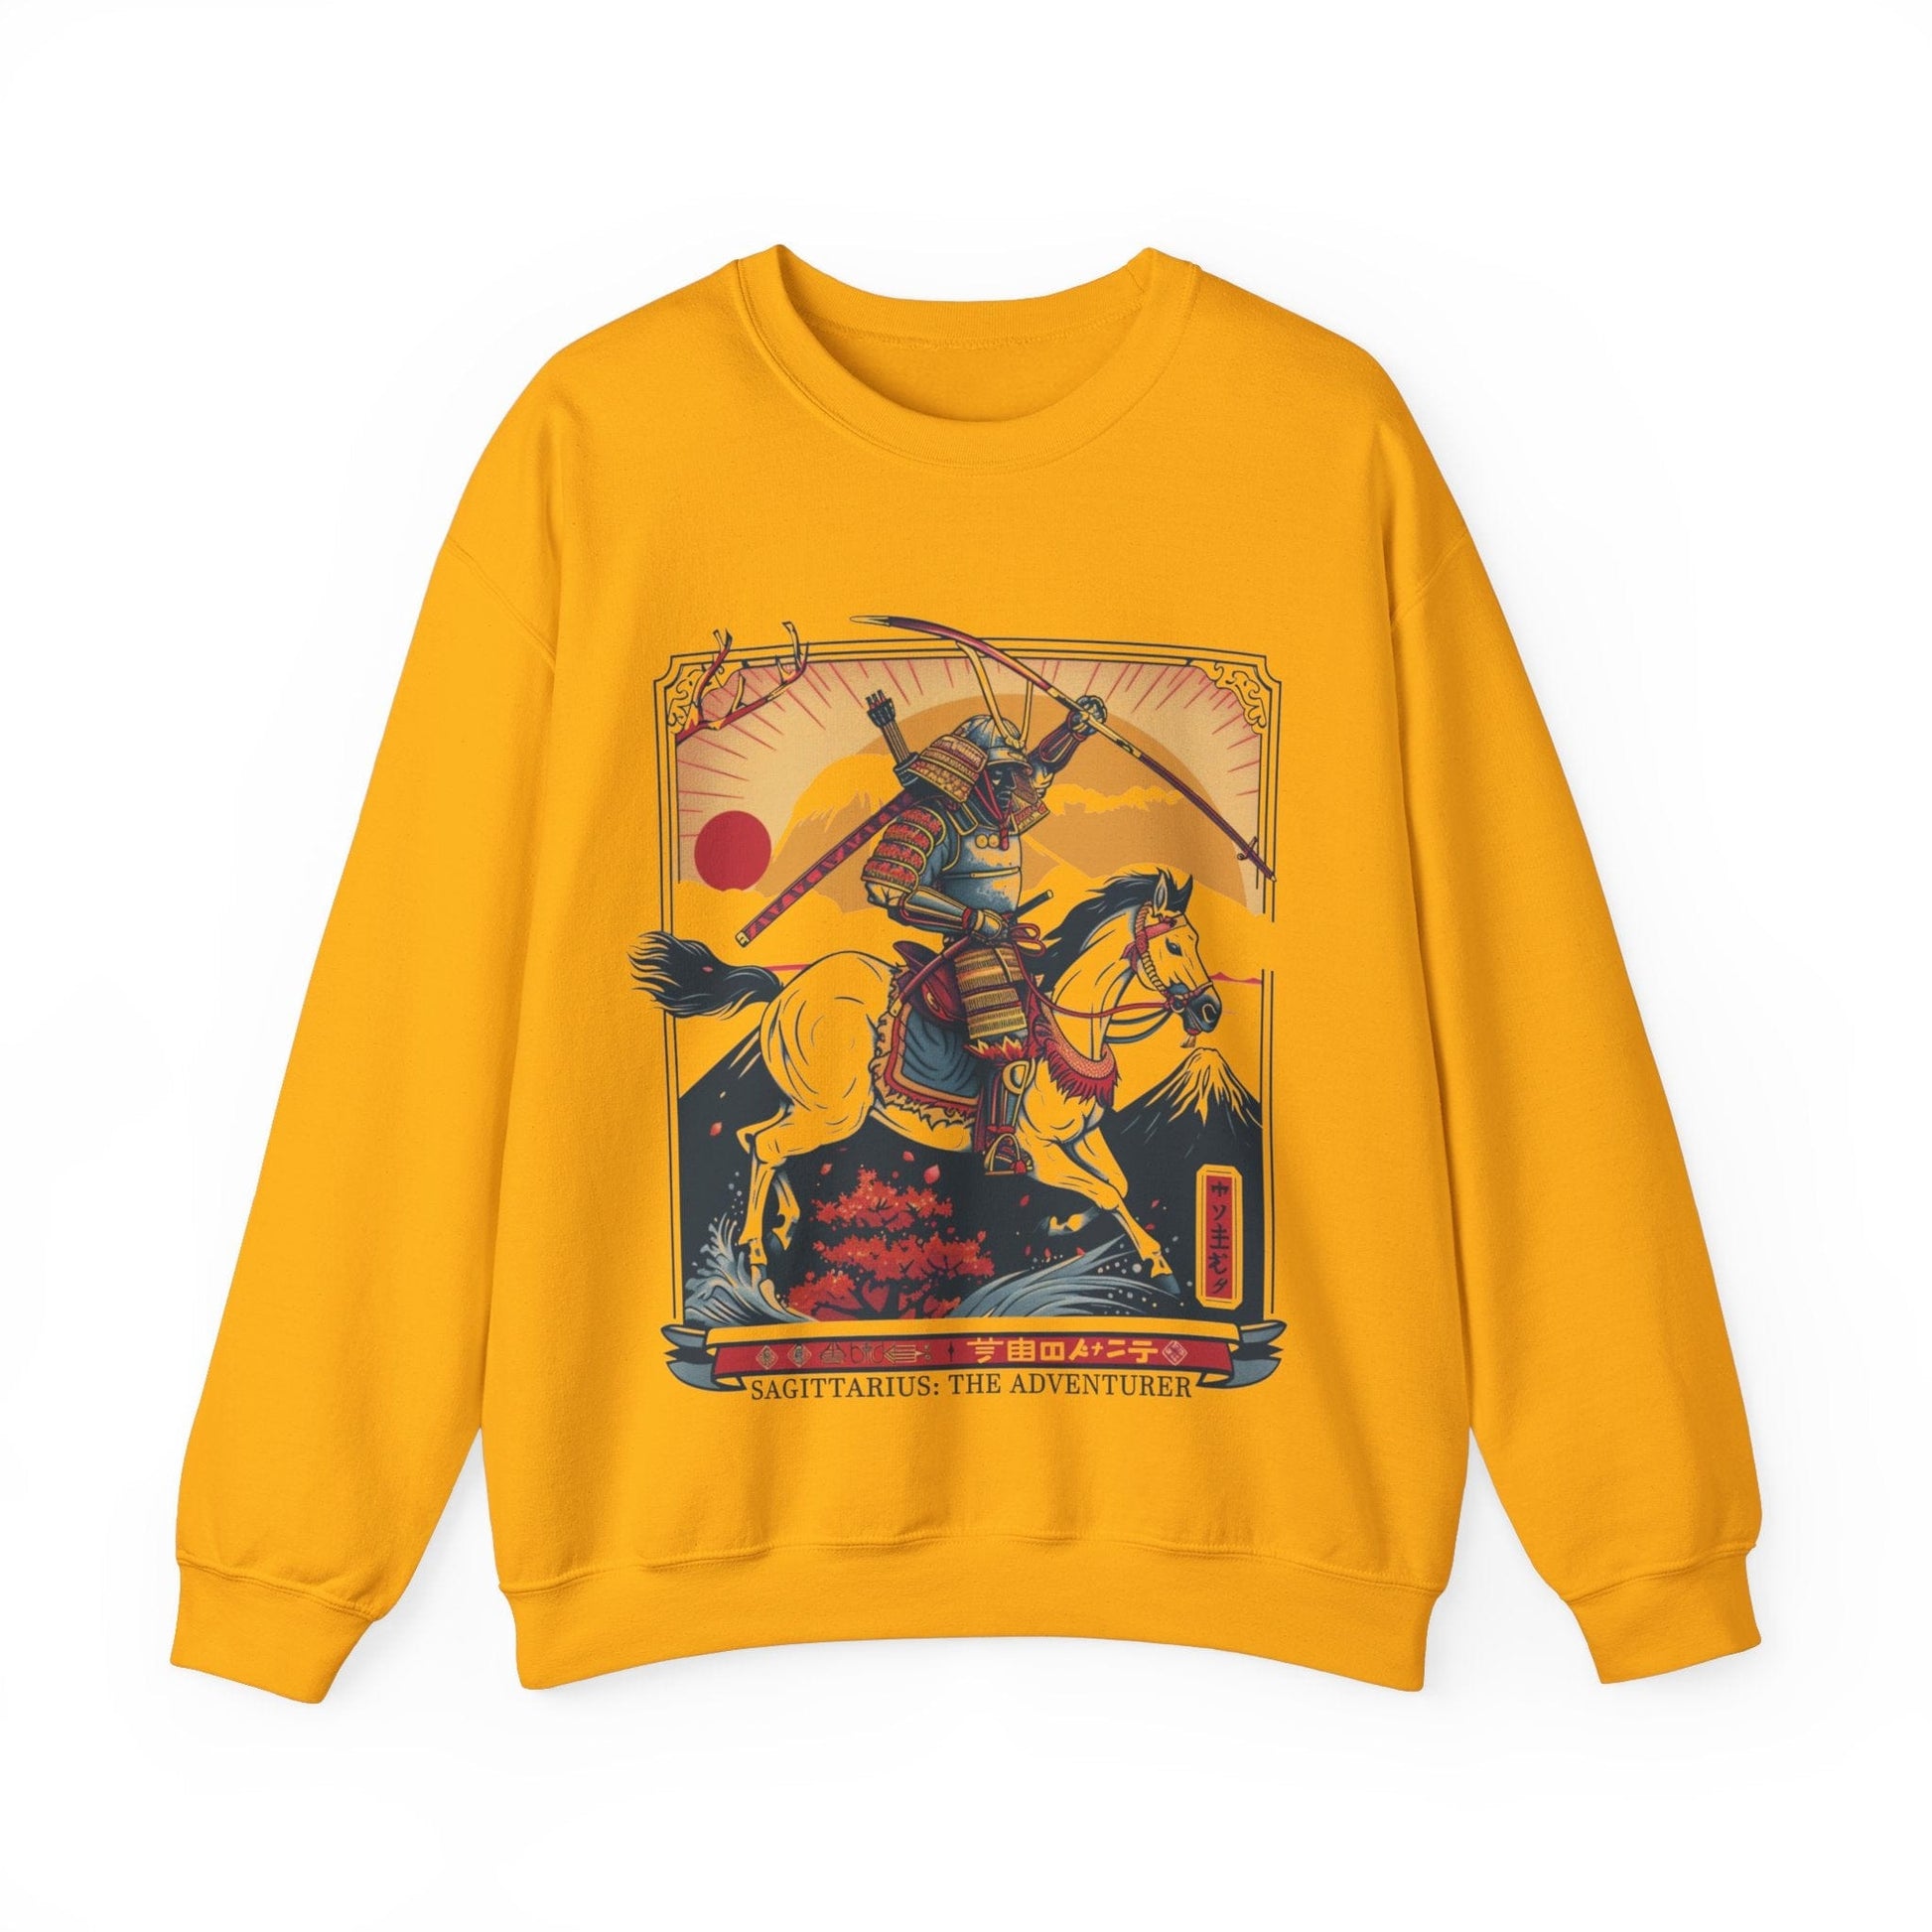 Sweatshirt S / Gold Shogun Quest Sagittarius Sweater: The Warrior's Path